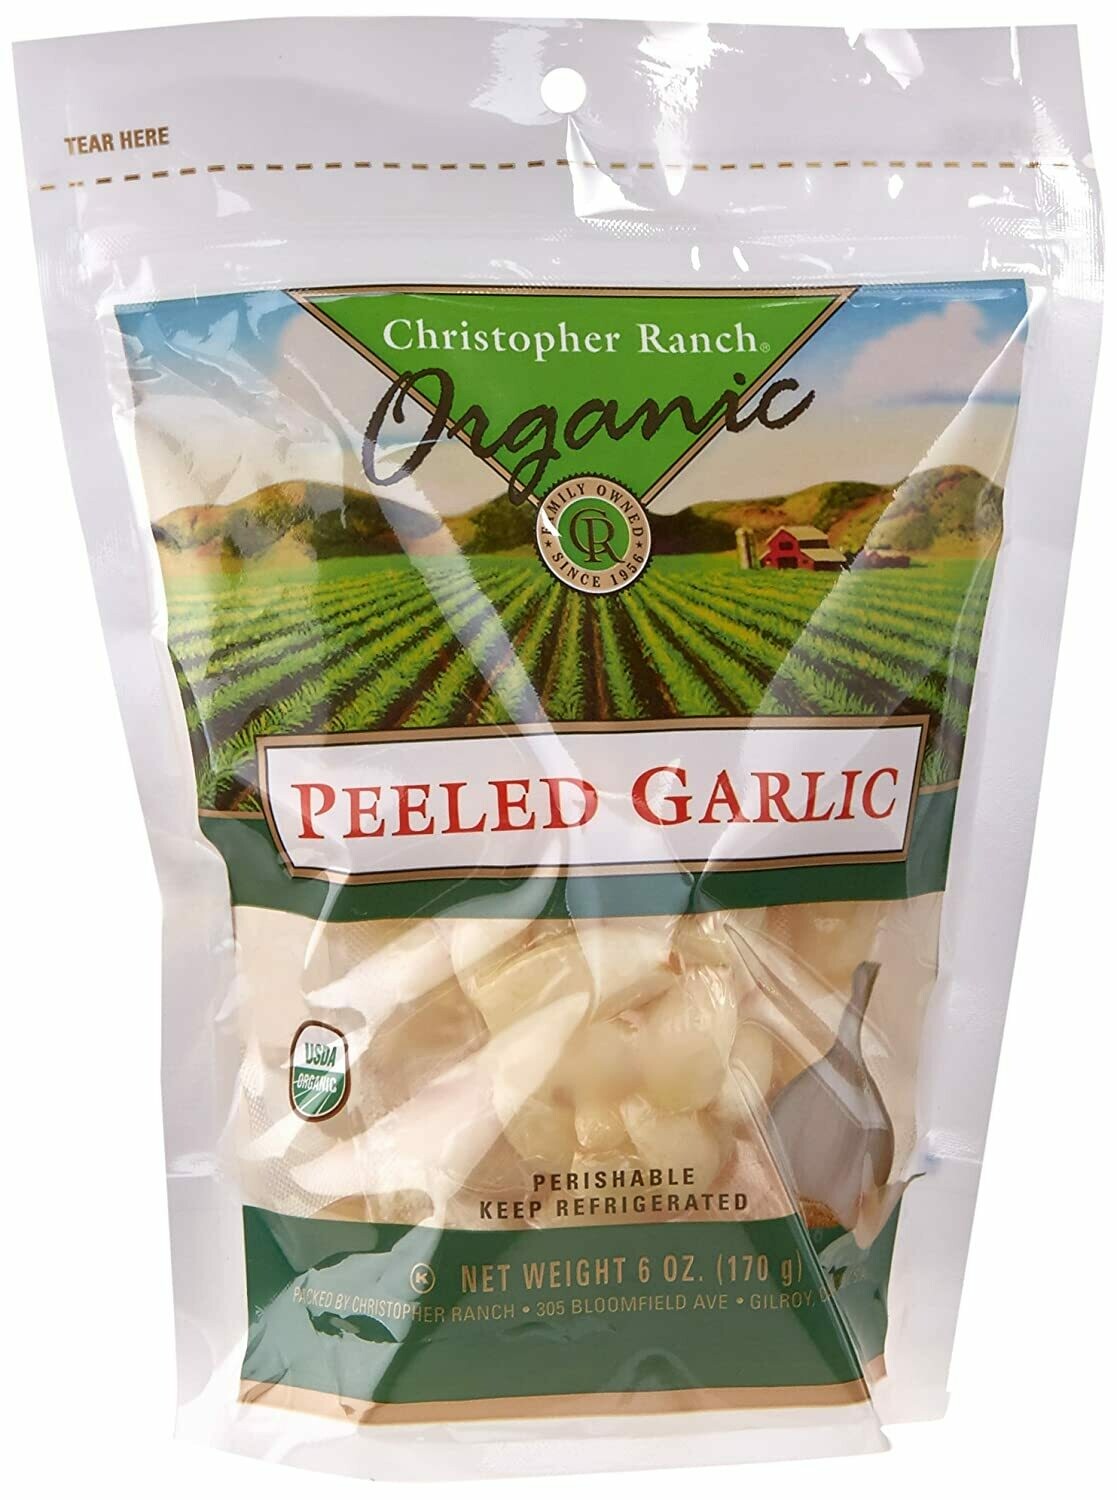 Produce / Vegetable / Organic Peeled Garlic, 6 oz. bag